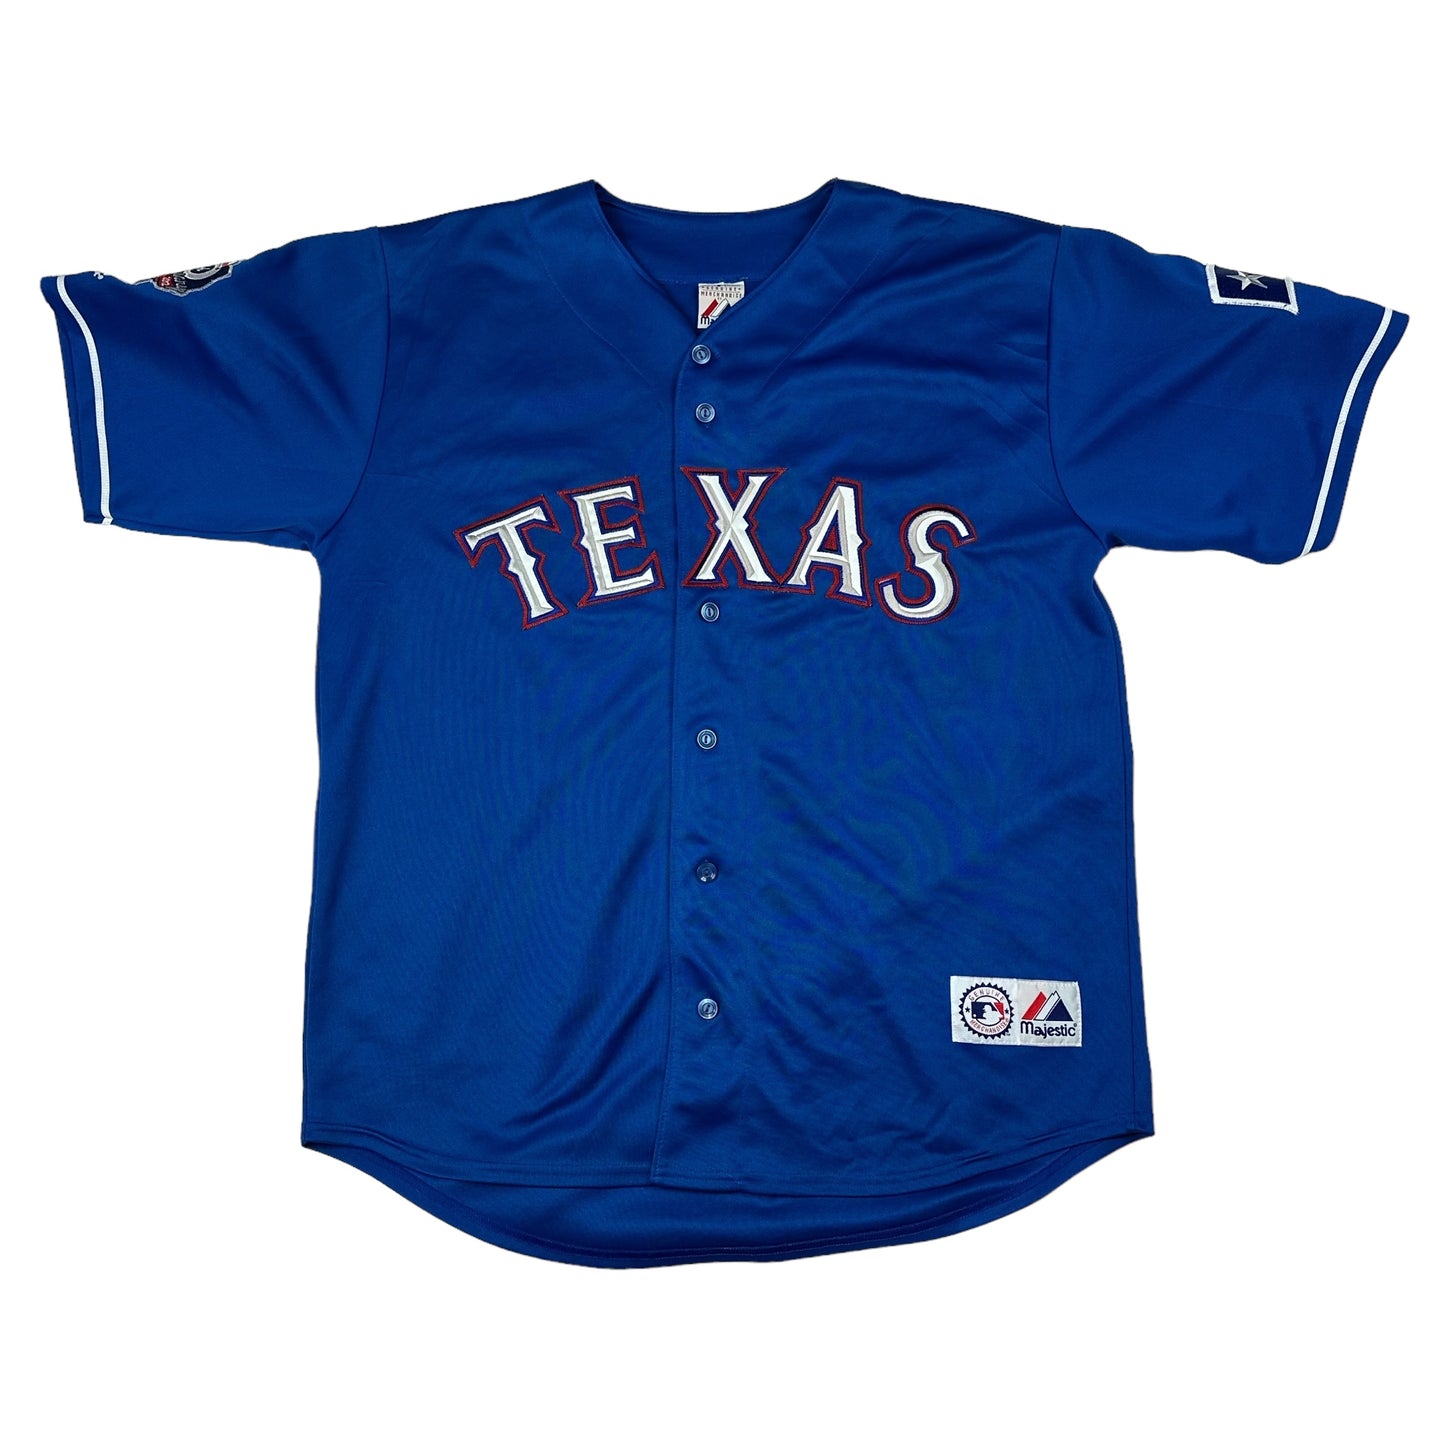 Josh Hamilton Texas Rangers Blue Majestic Baseball Jersey